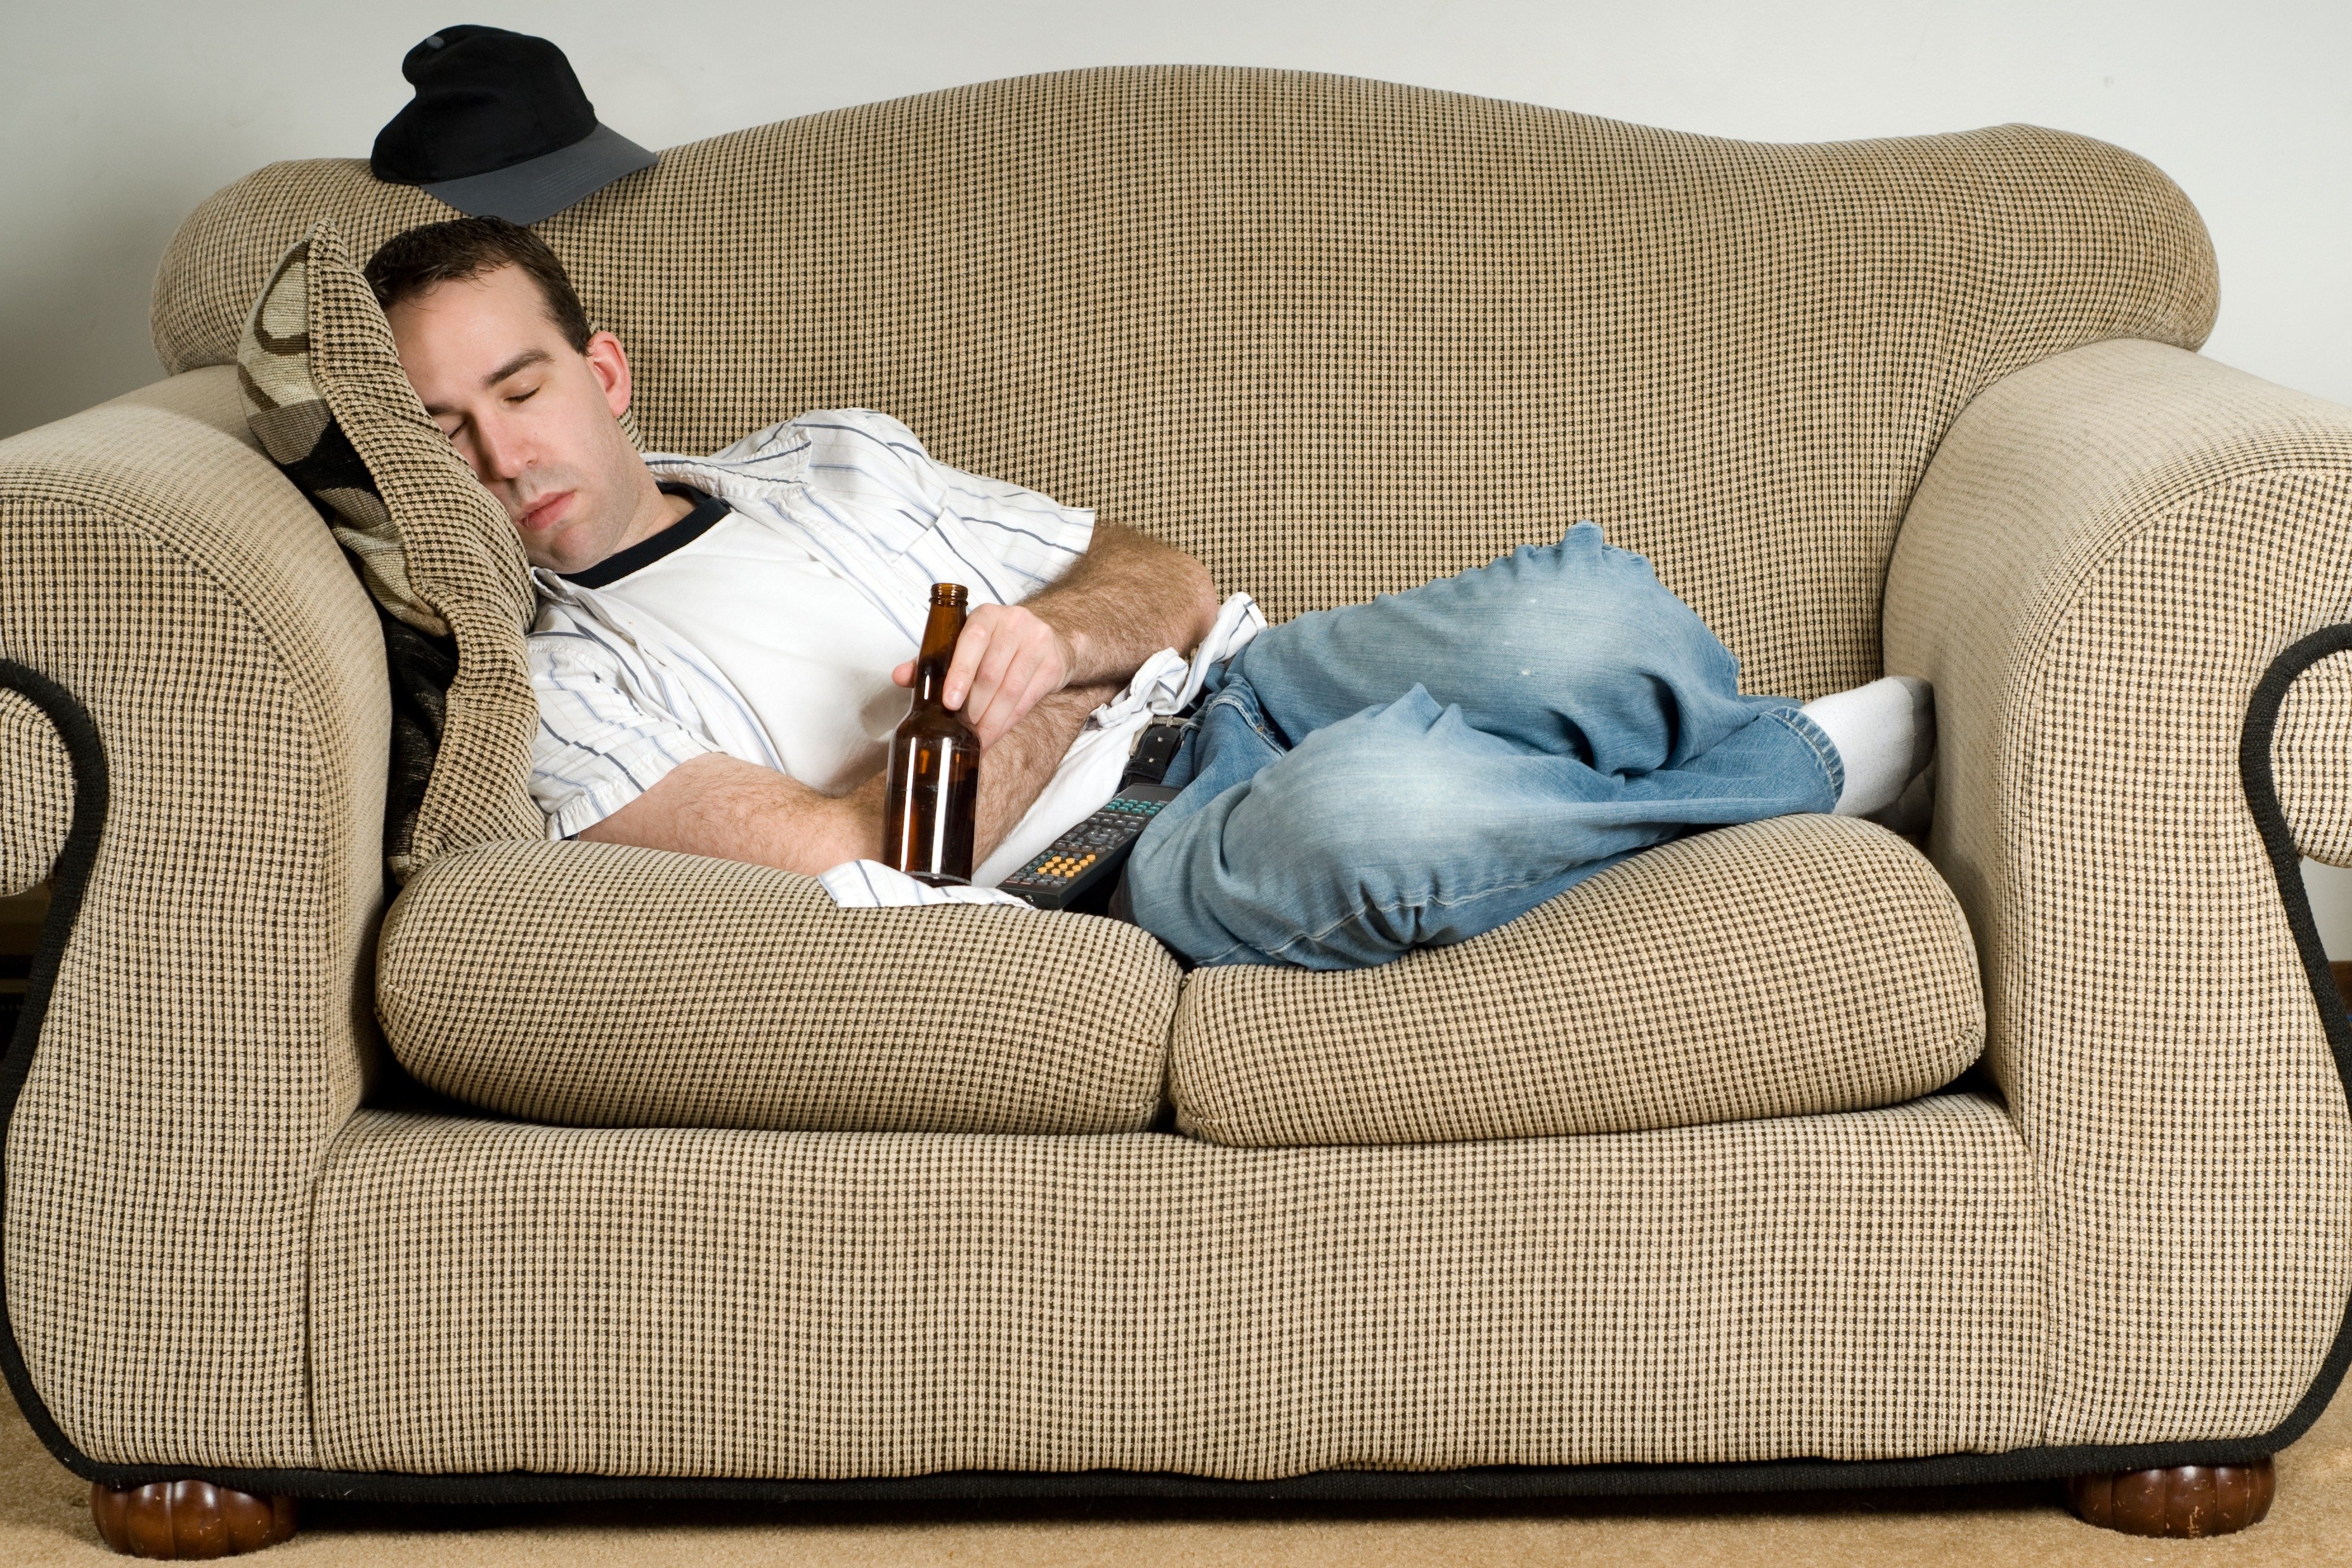 Спят на диване ночью. Человек на диване. Человек отдыхает на диване. Человек лежит на диване. Мужик на диване.